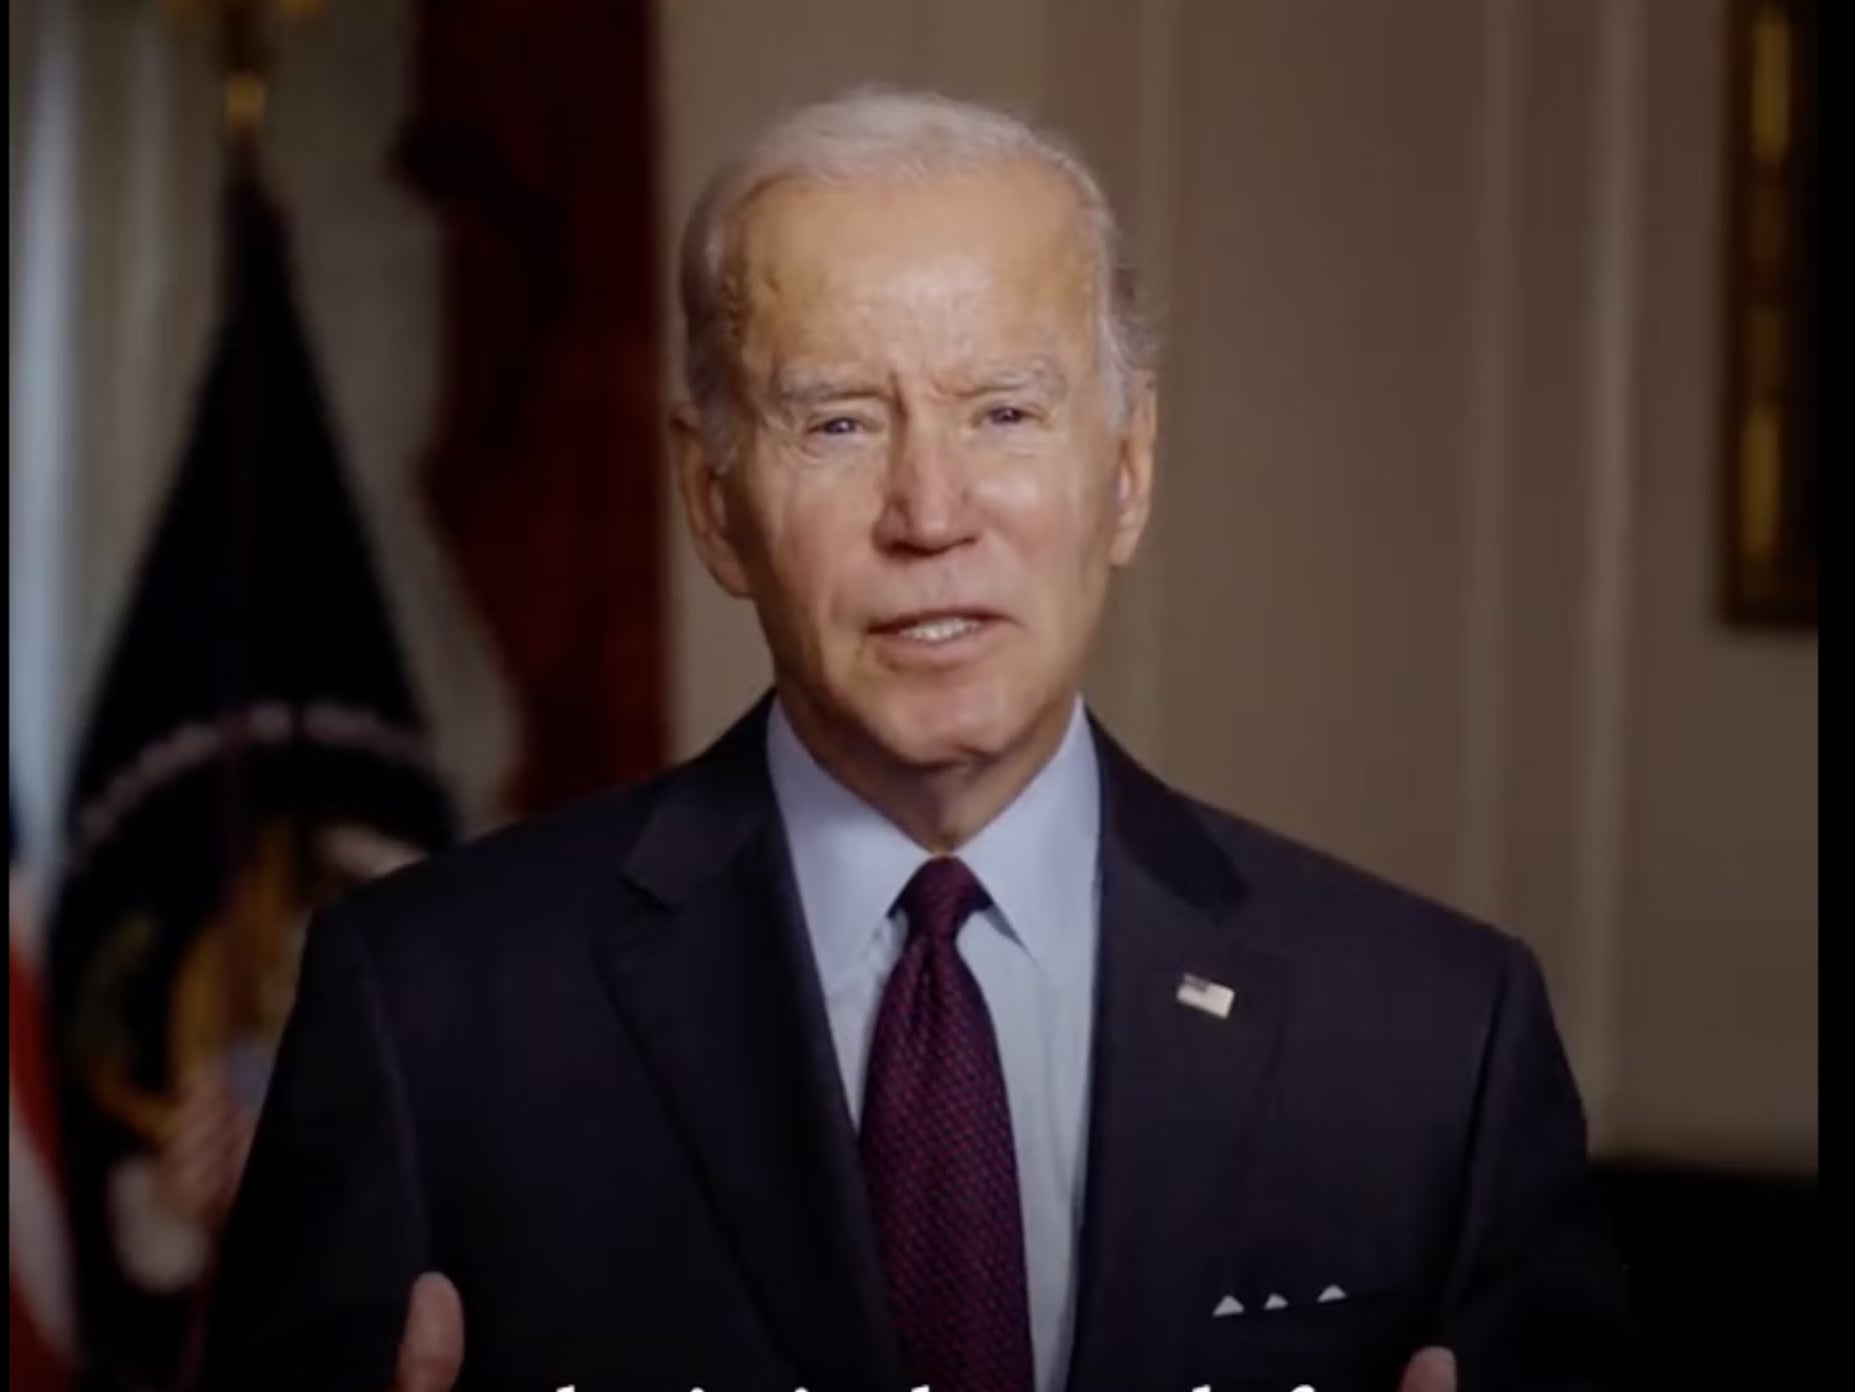 Joe Biden released a video explaining why he is pardoning low-level marijuana convictions